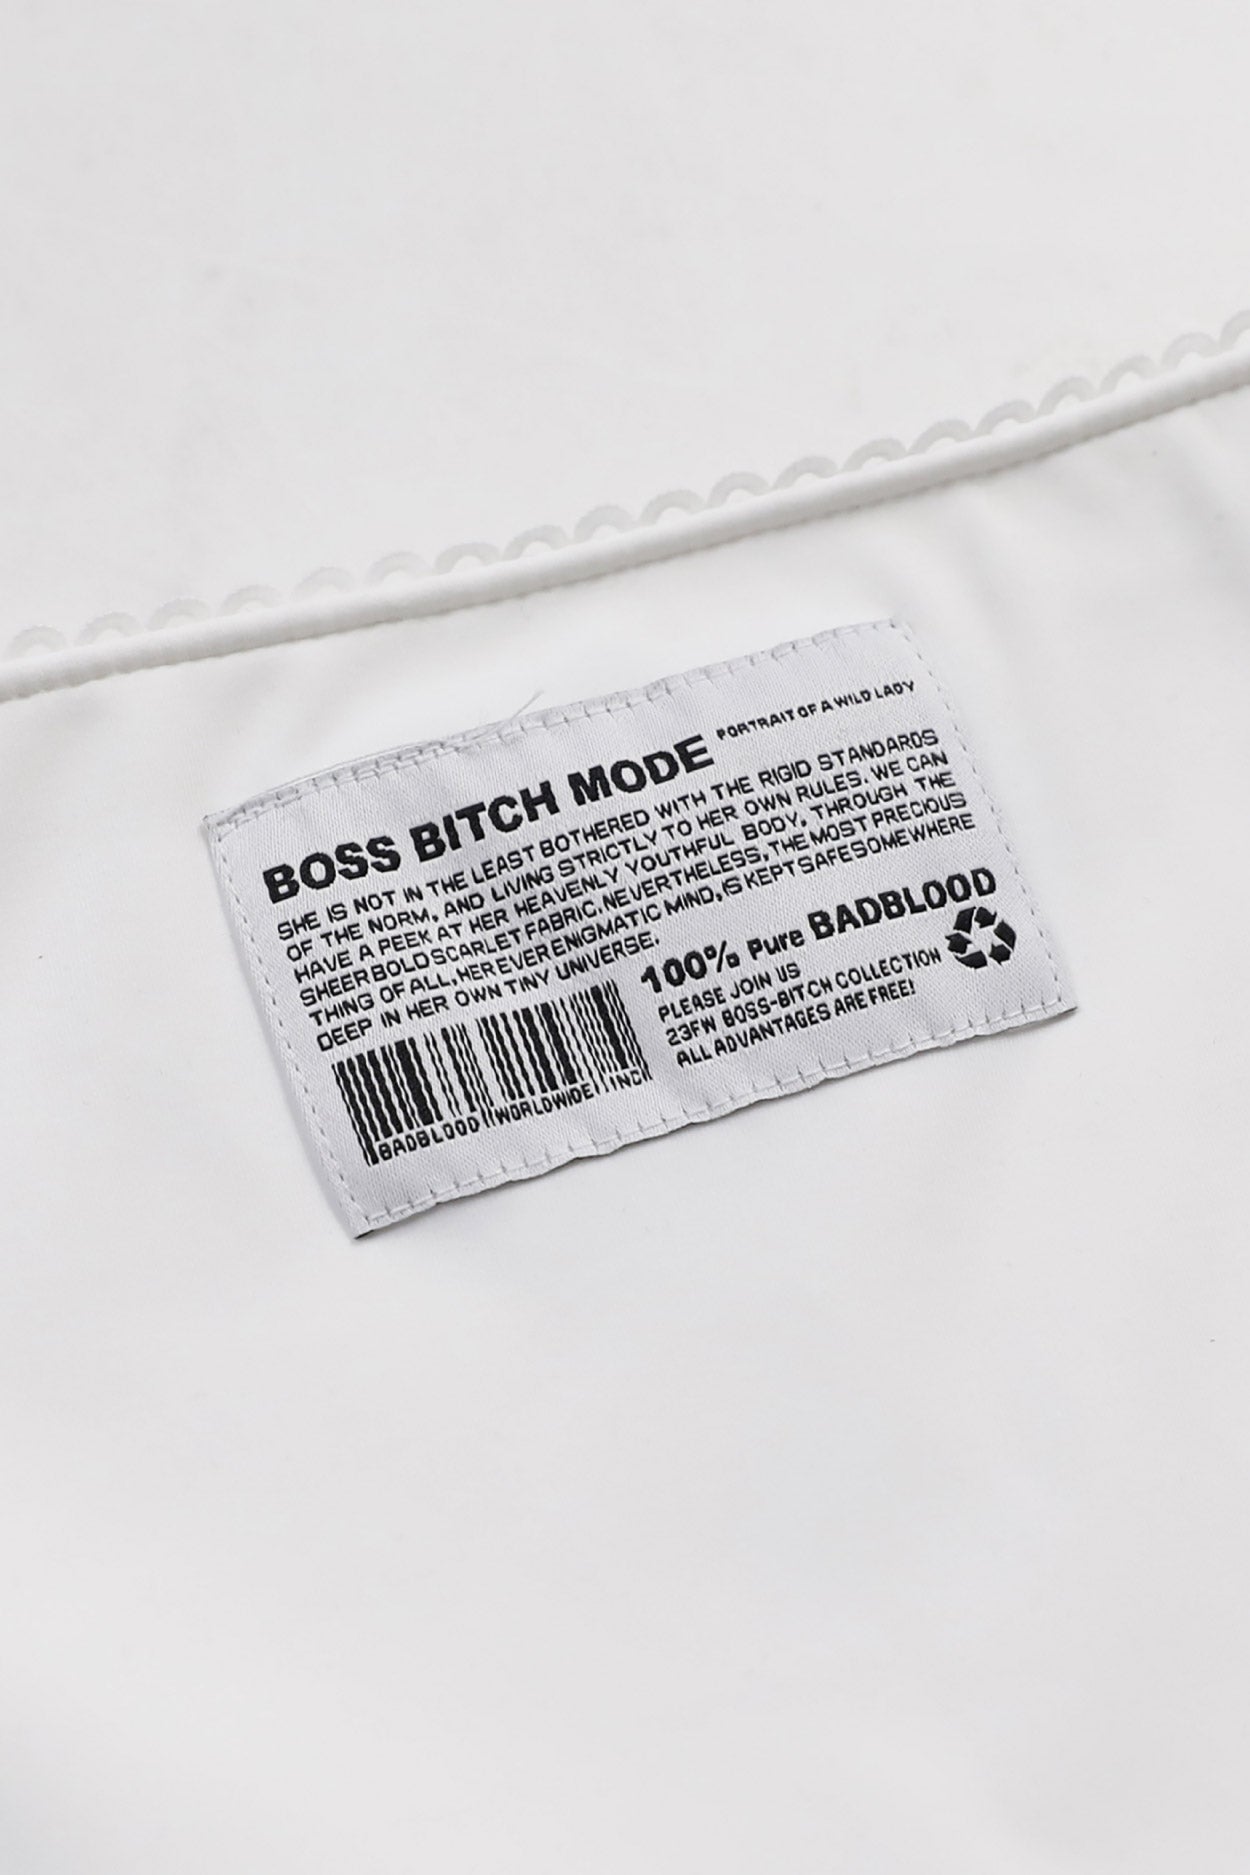 Badblood Boss Mode Bikini Bottom White